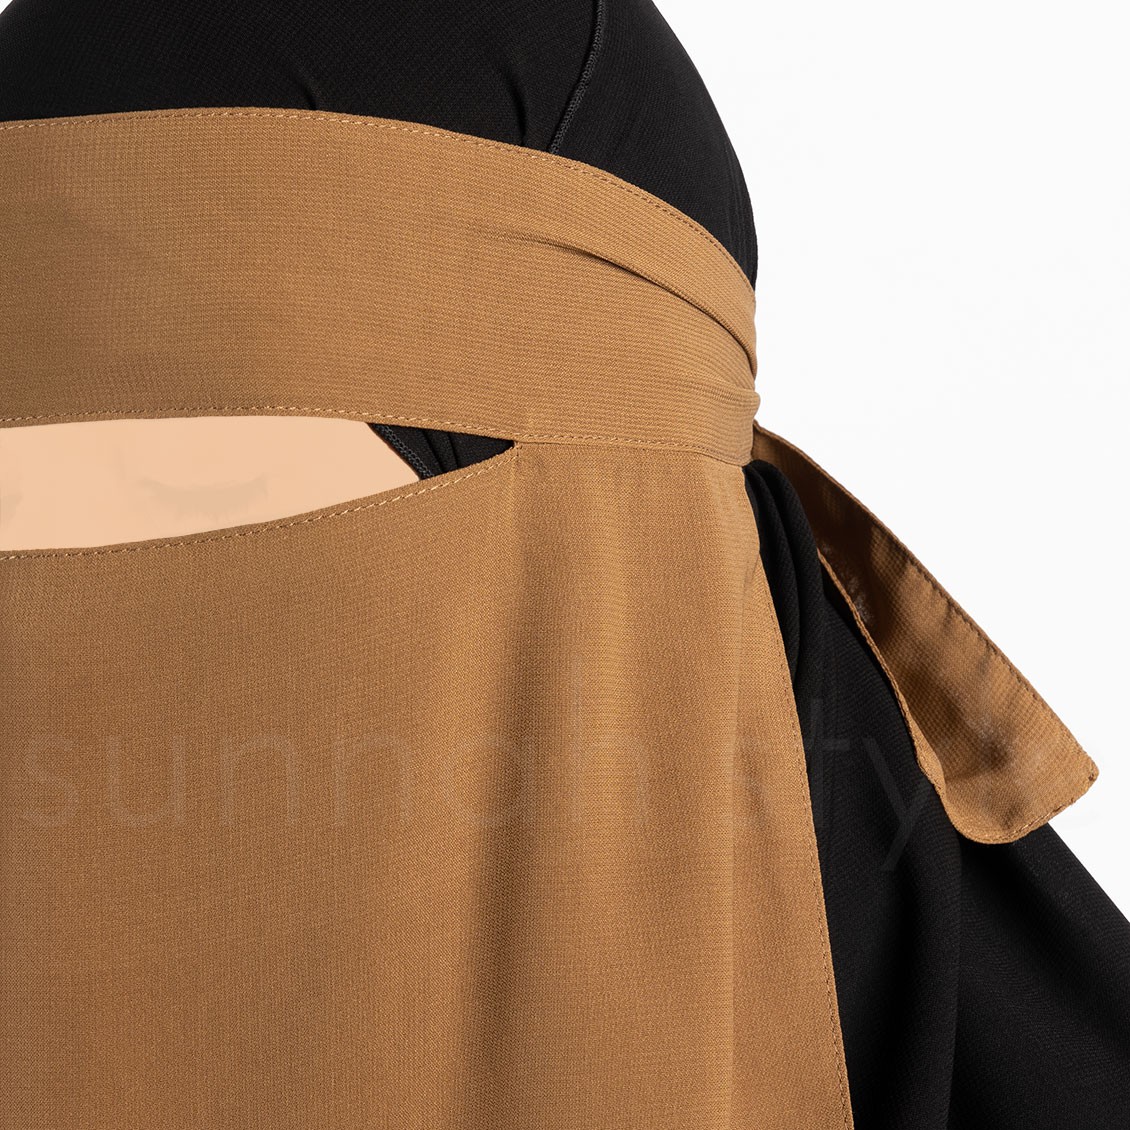 Sunnah Style Long One Layer Niqab Caramel